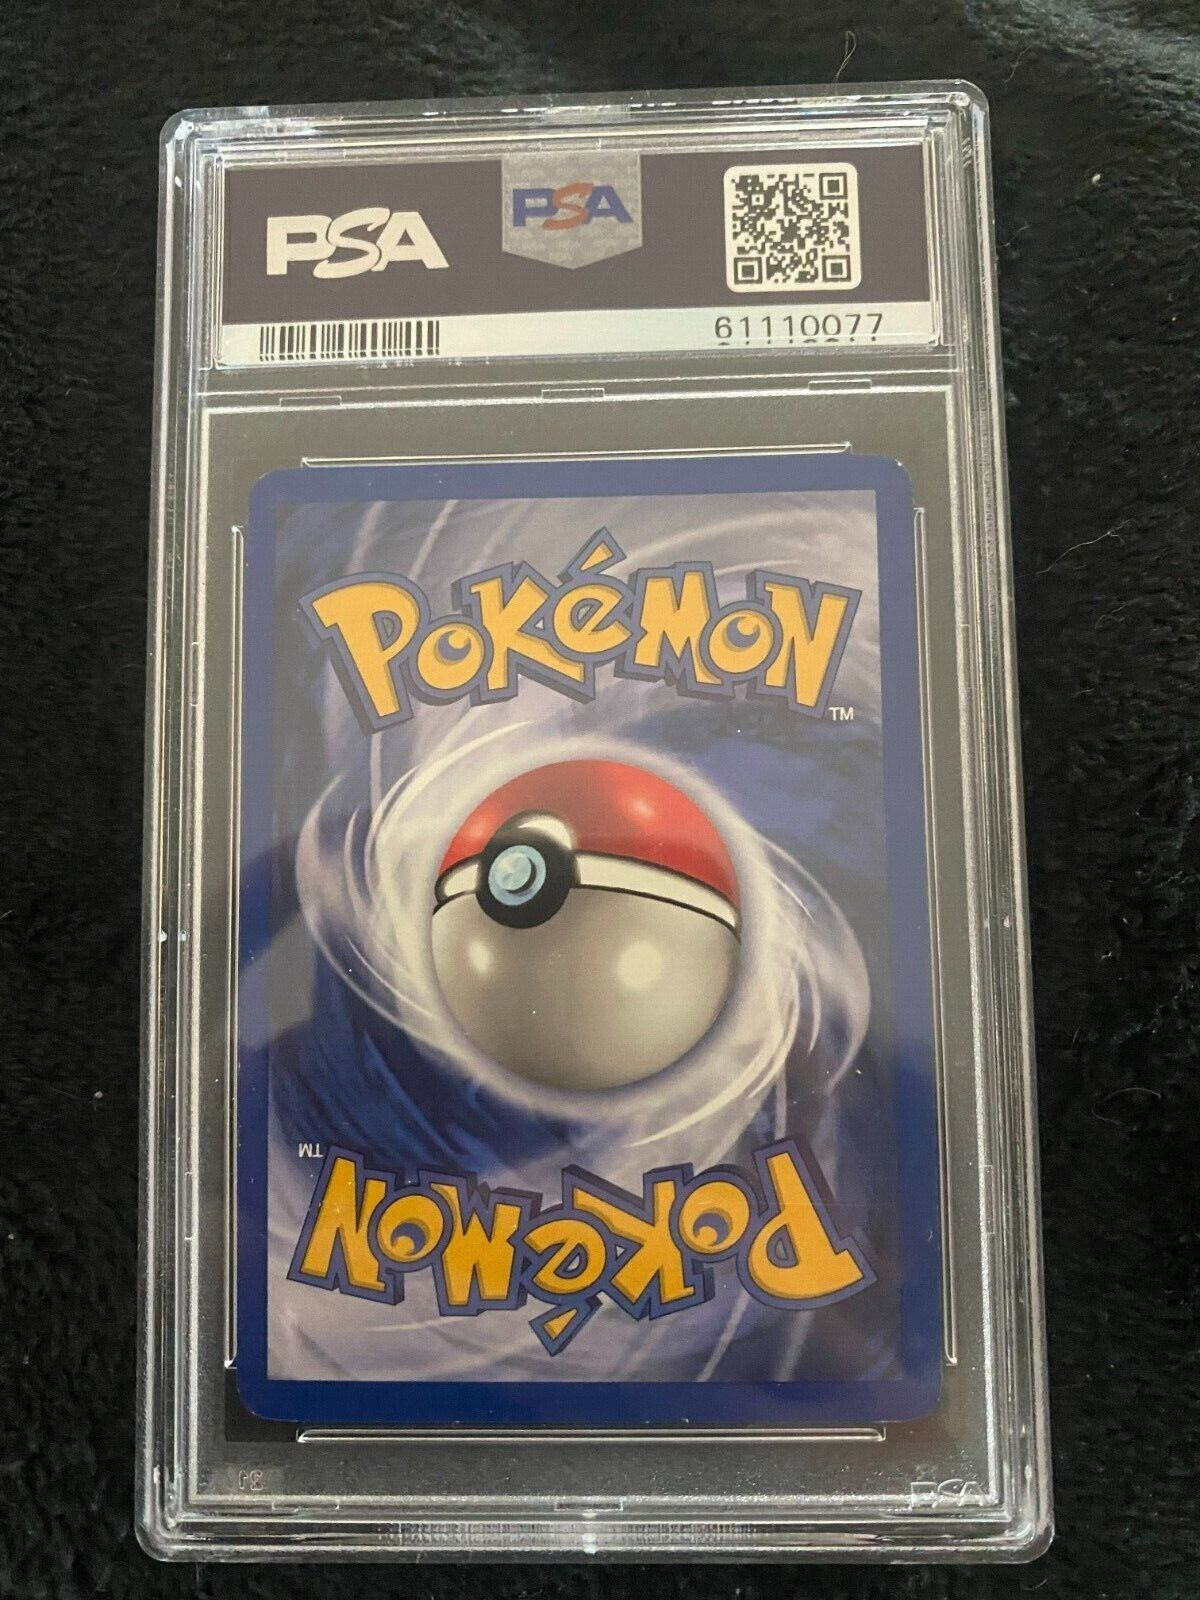 1999 Pokemon jungle 1/64 Clefable 1st Edition Holo Rare PSA 7 graded card - Image 2